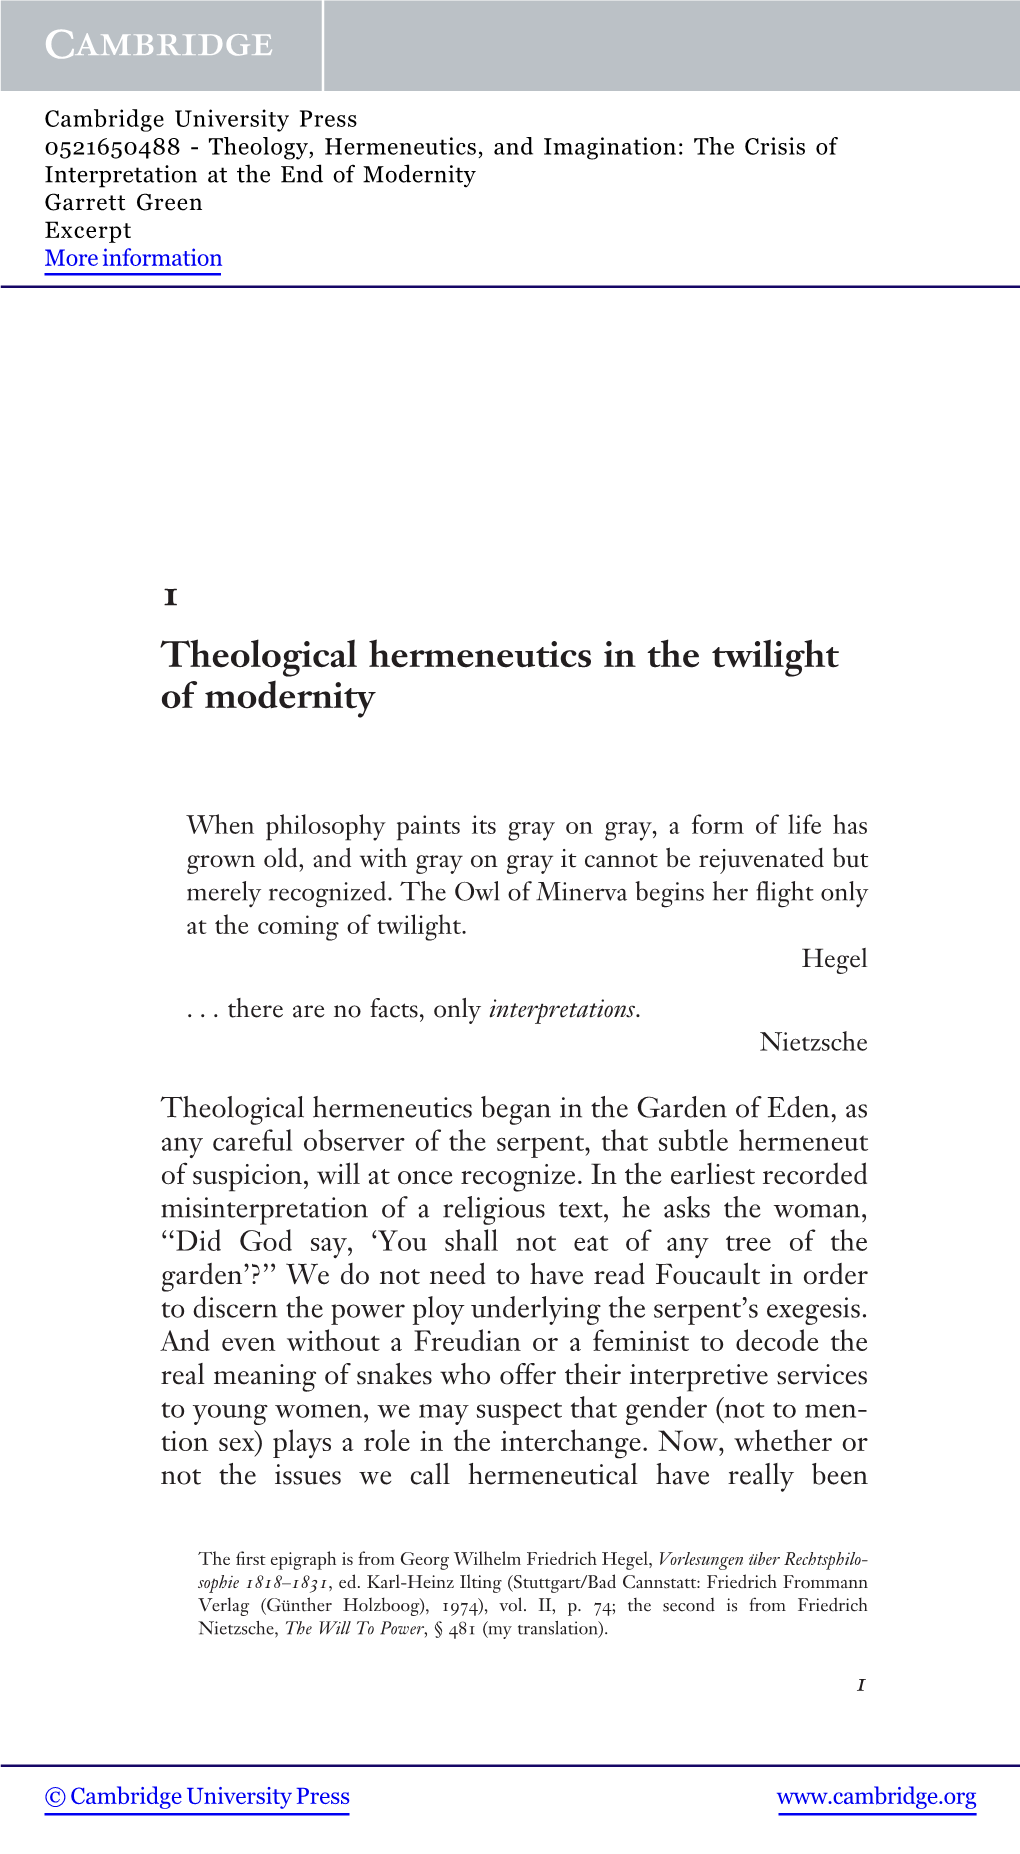 1 Theological Hermeneutics in the Twilight of Modernity